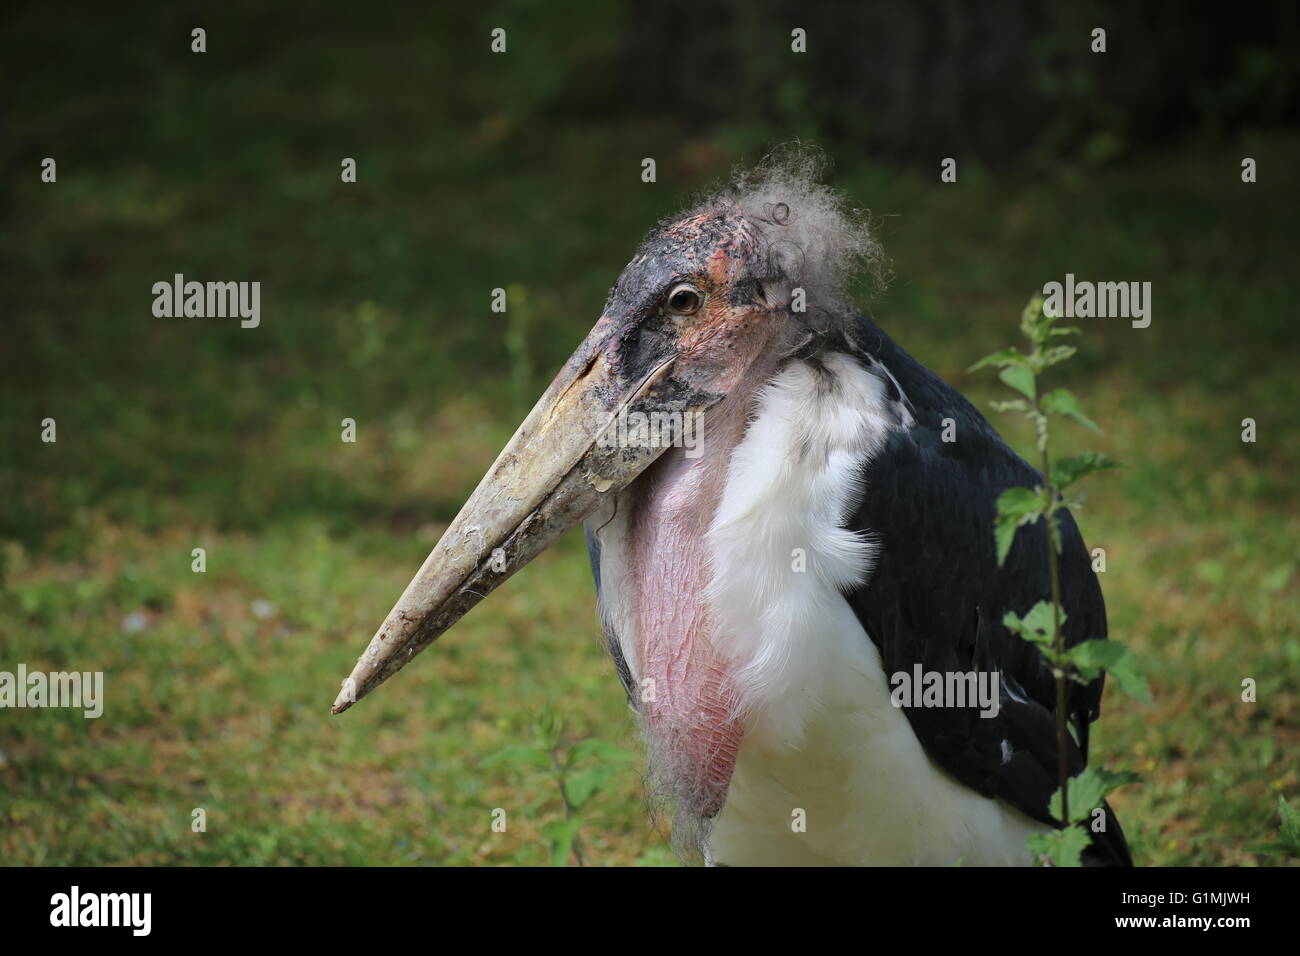 Portrait of a marabou stork (Leptoptilos crumenifer). Stock Photo